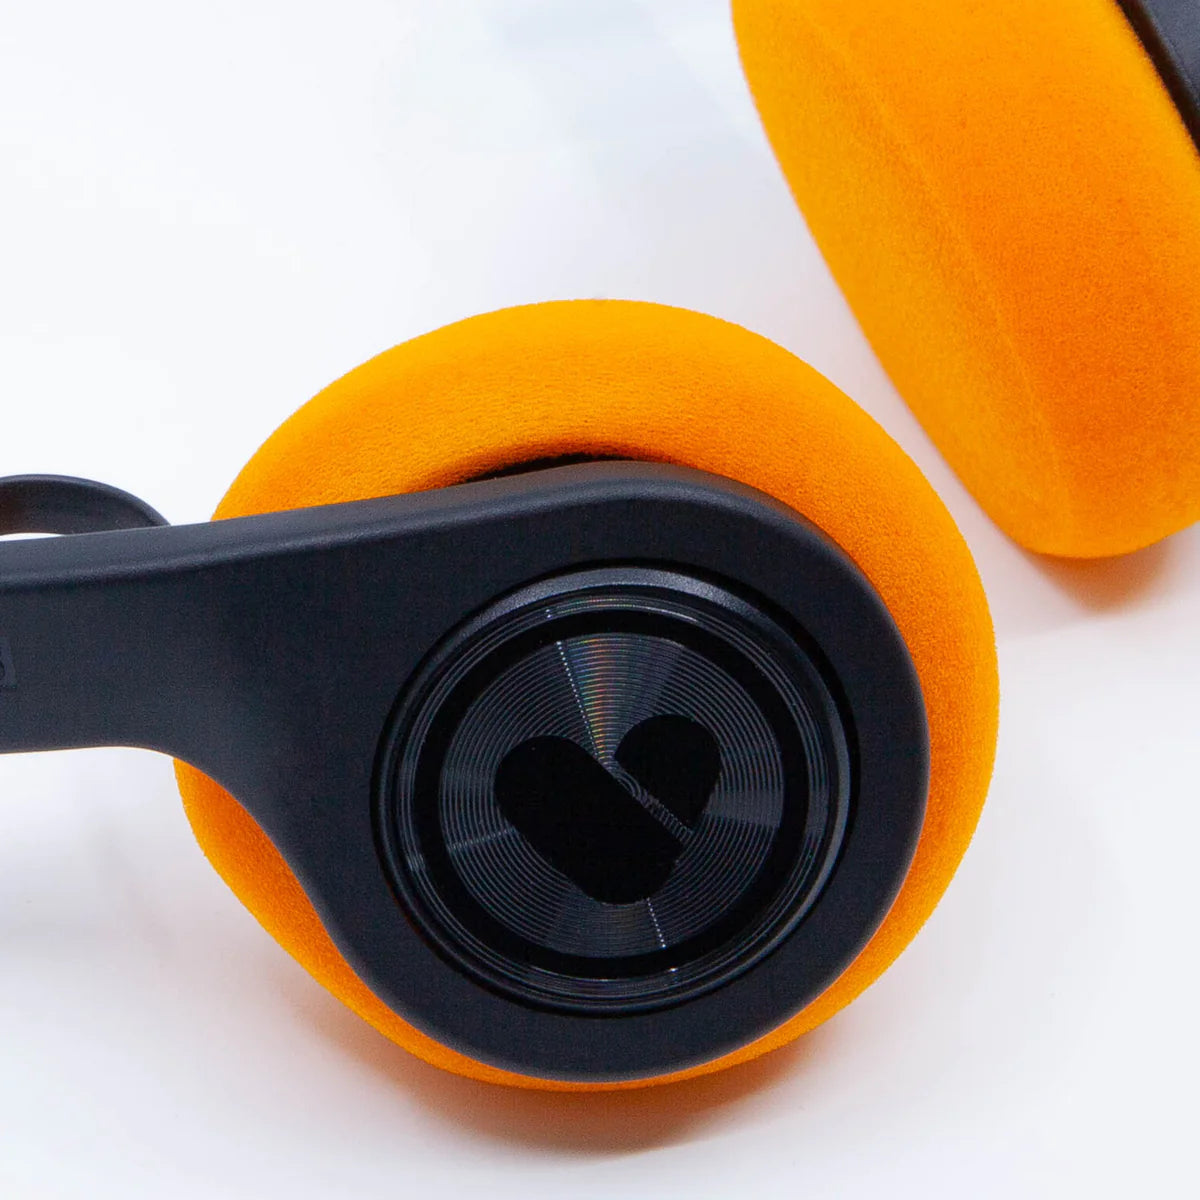 closup EQ-001 wireless headphones with orange cushion